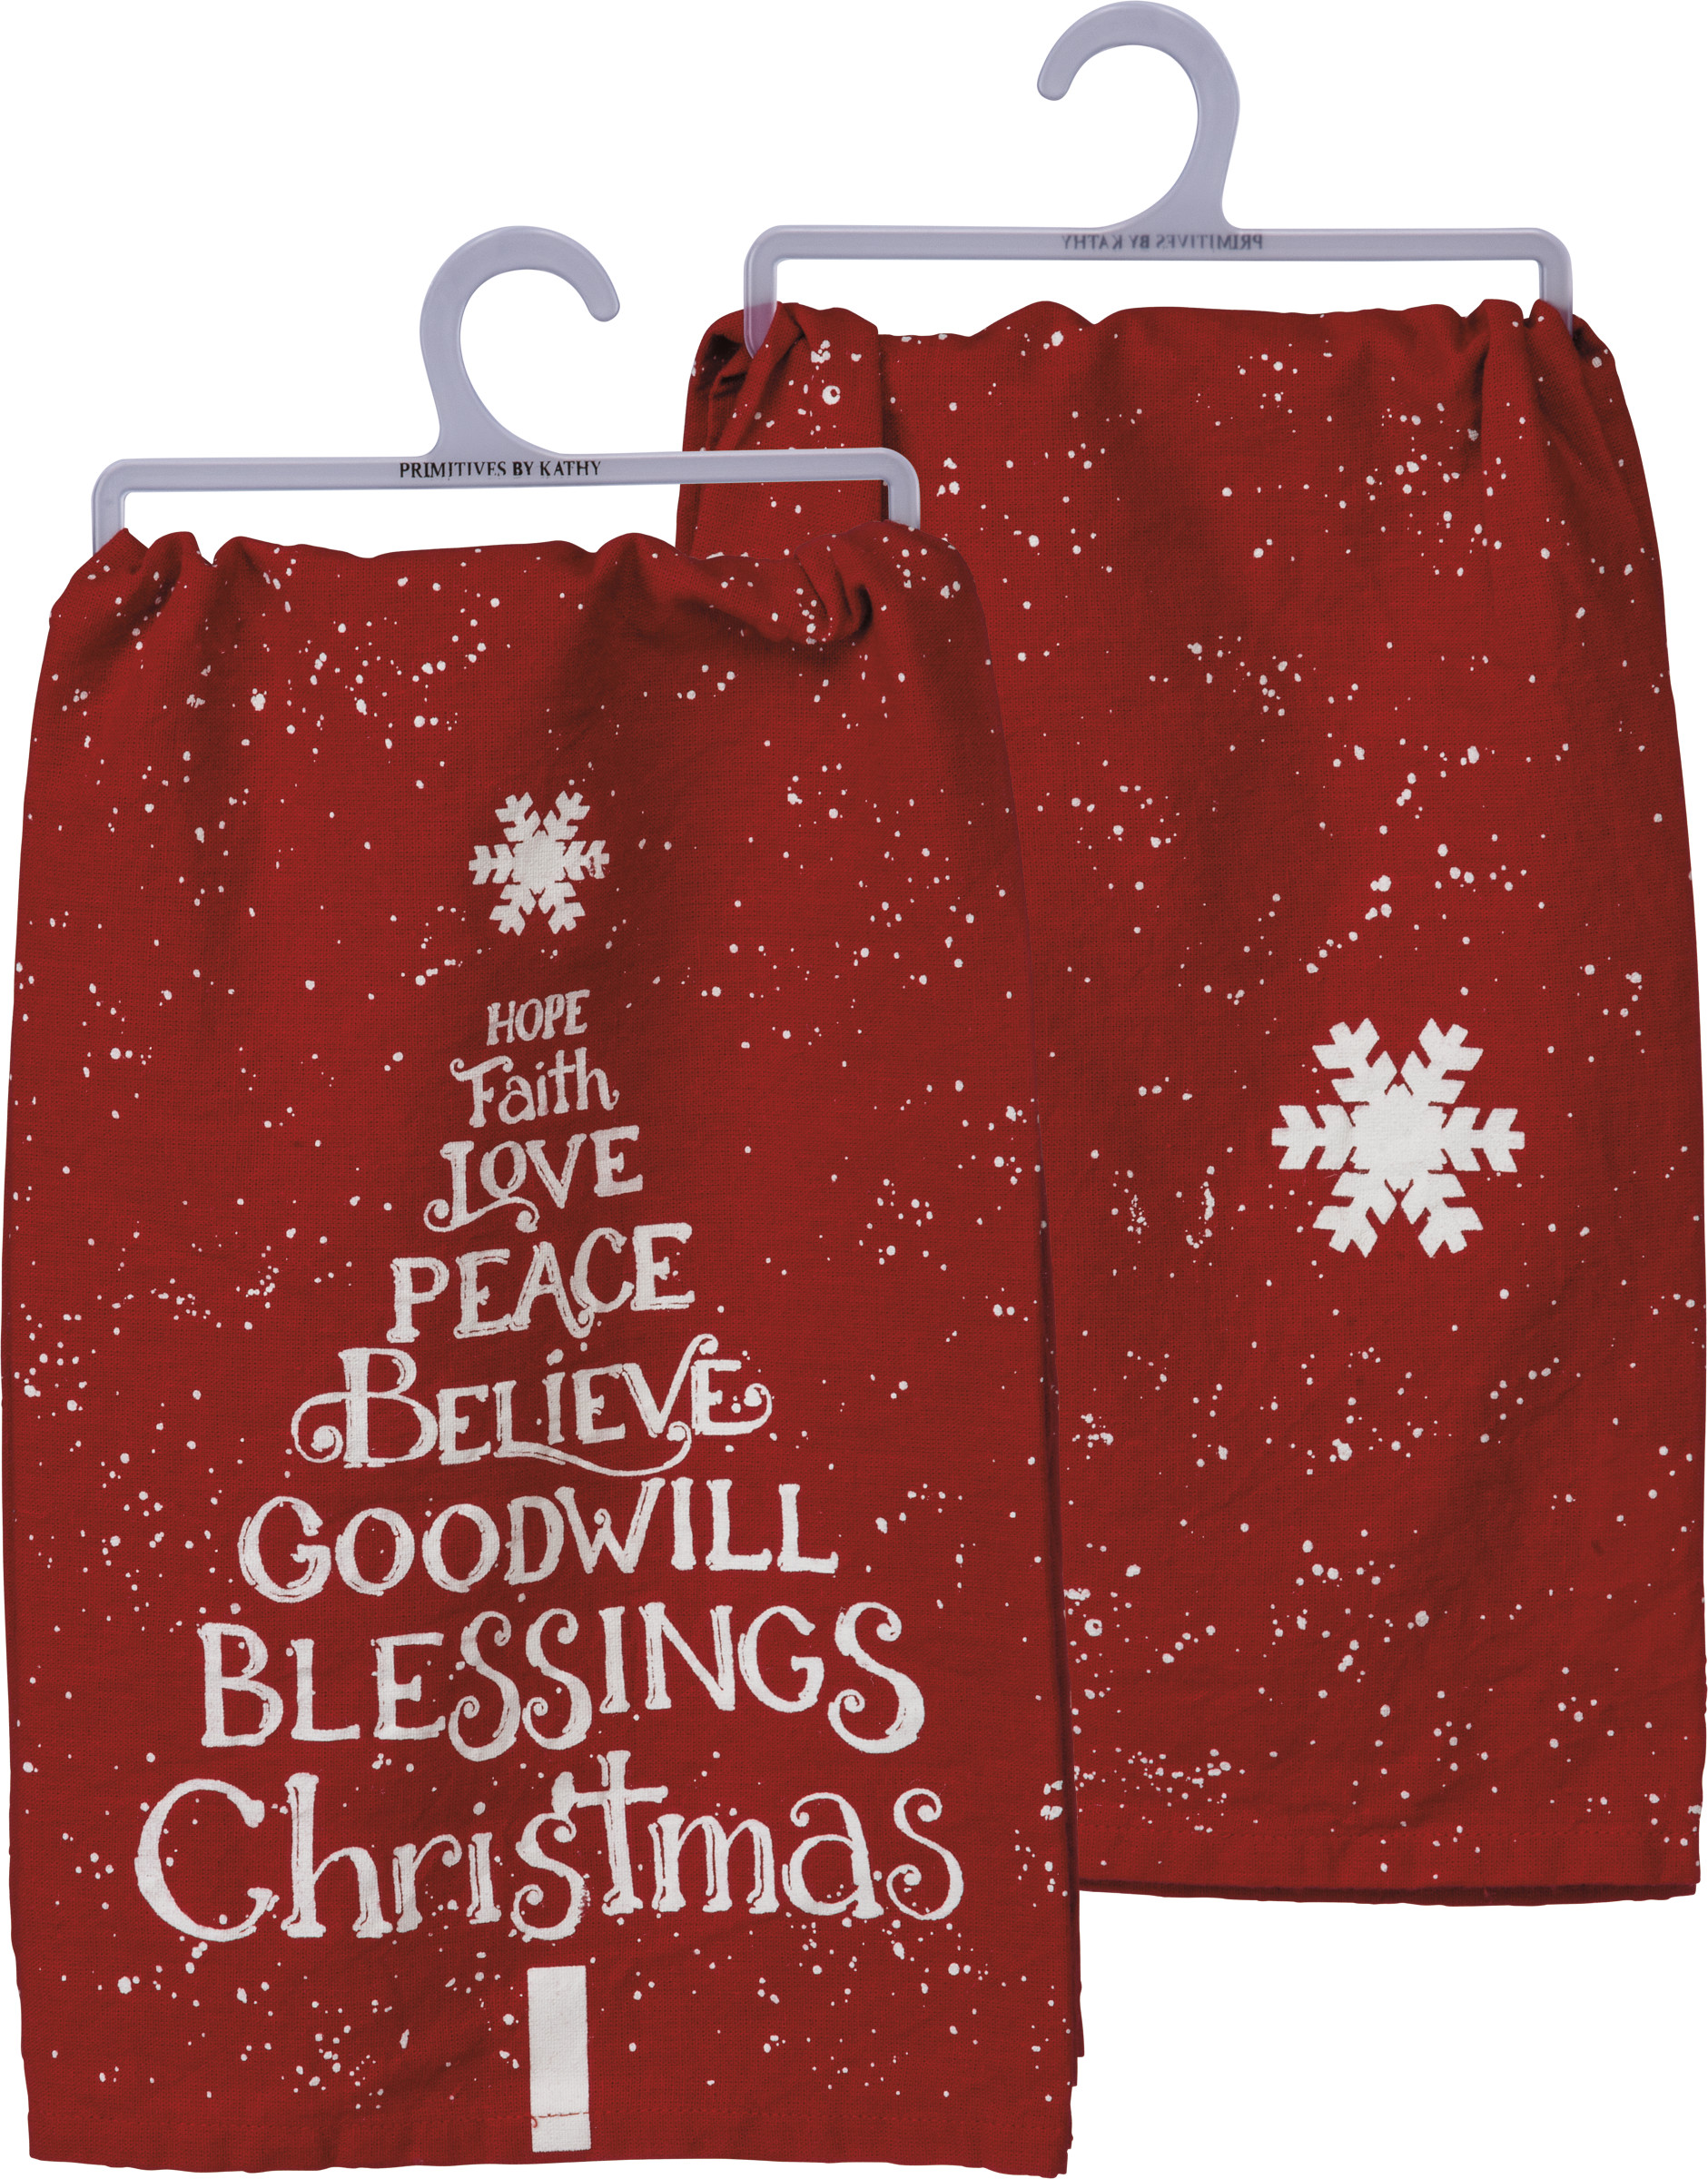 Happy Christmas Poem Kitchen Towels